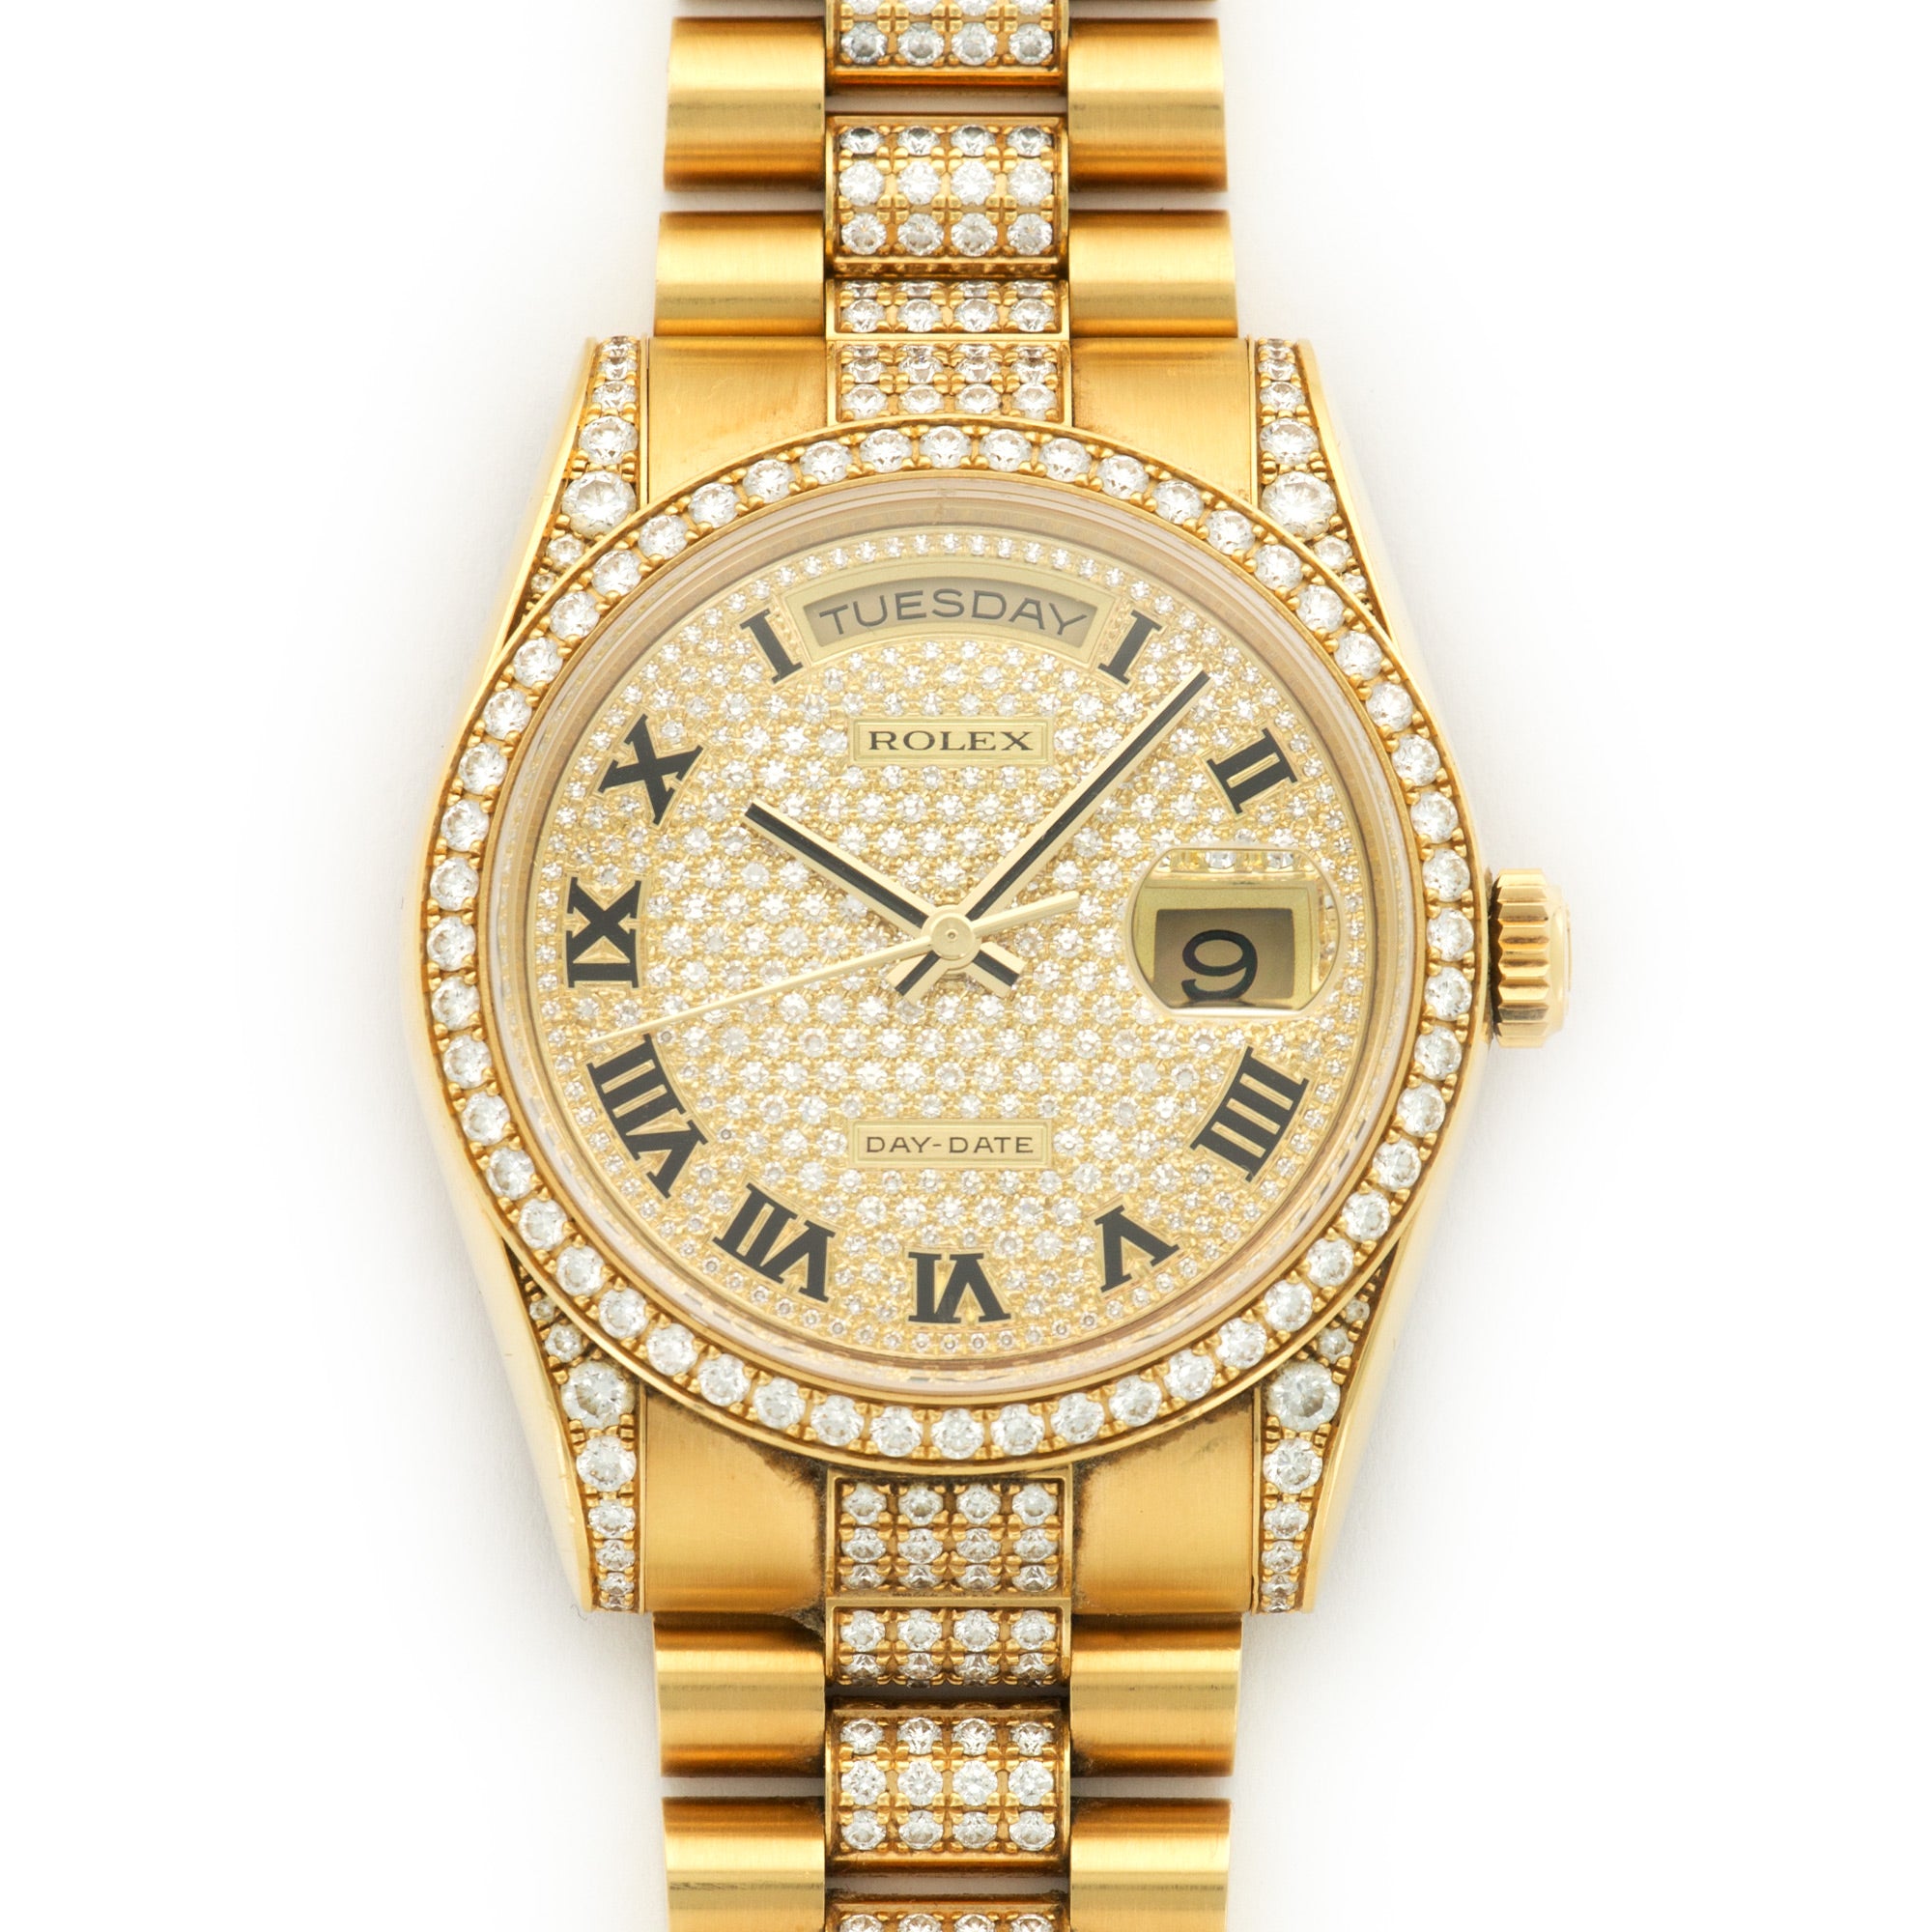 Rolex - Rolex Yellow Gold Day-Date Full Diamond Watch Ref. 118388 - The Keystone Watches